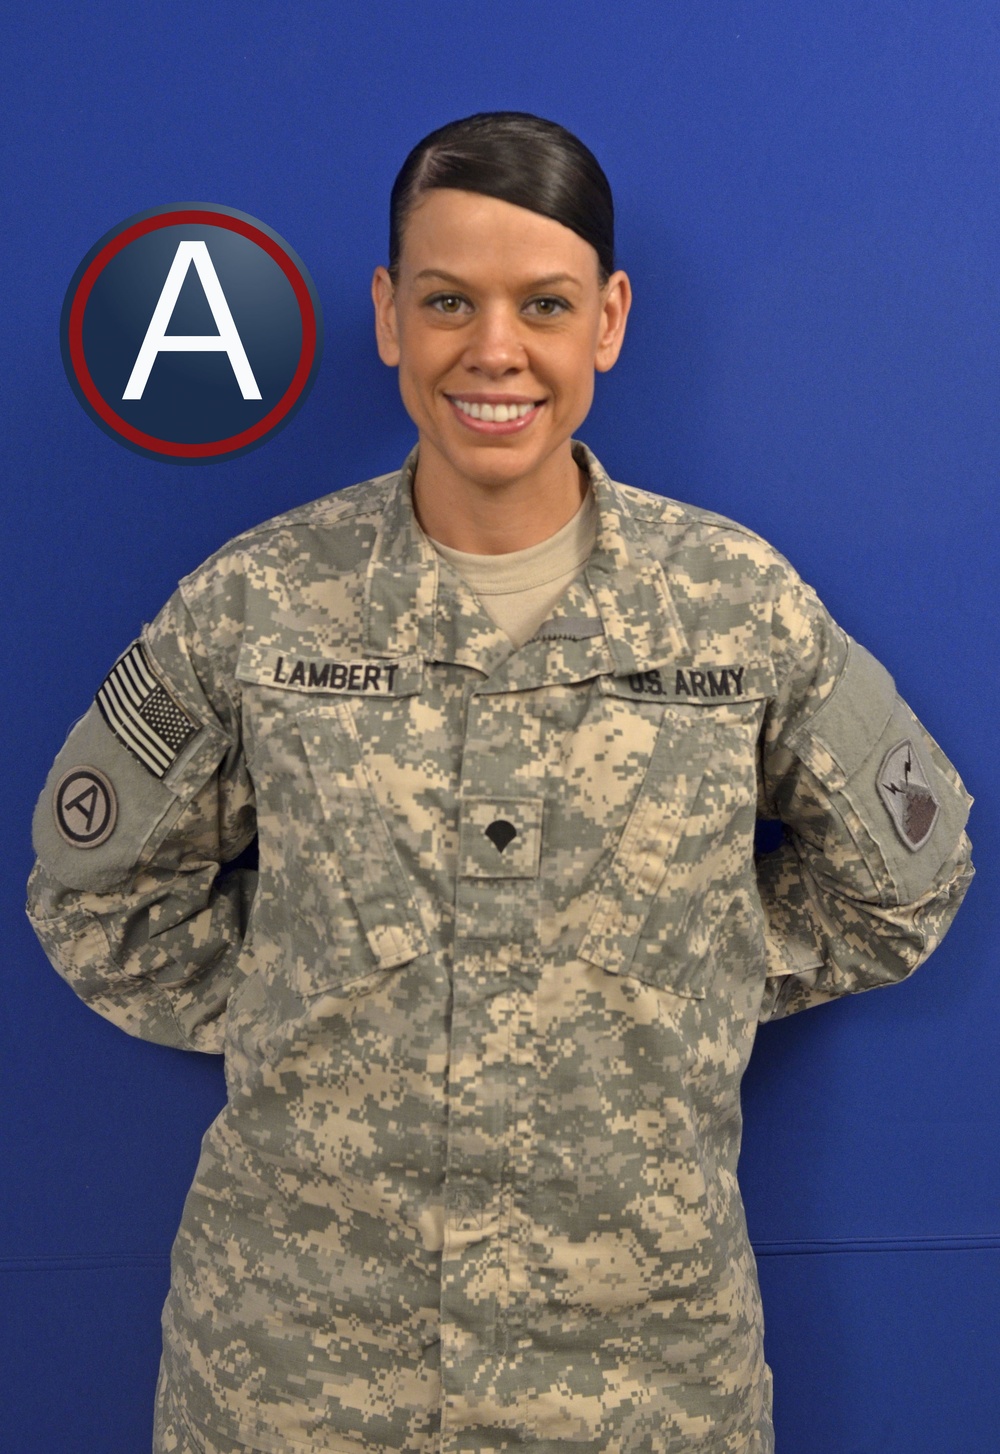 Soldier of the Week: Spc. Danielle Lambert